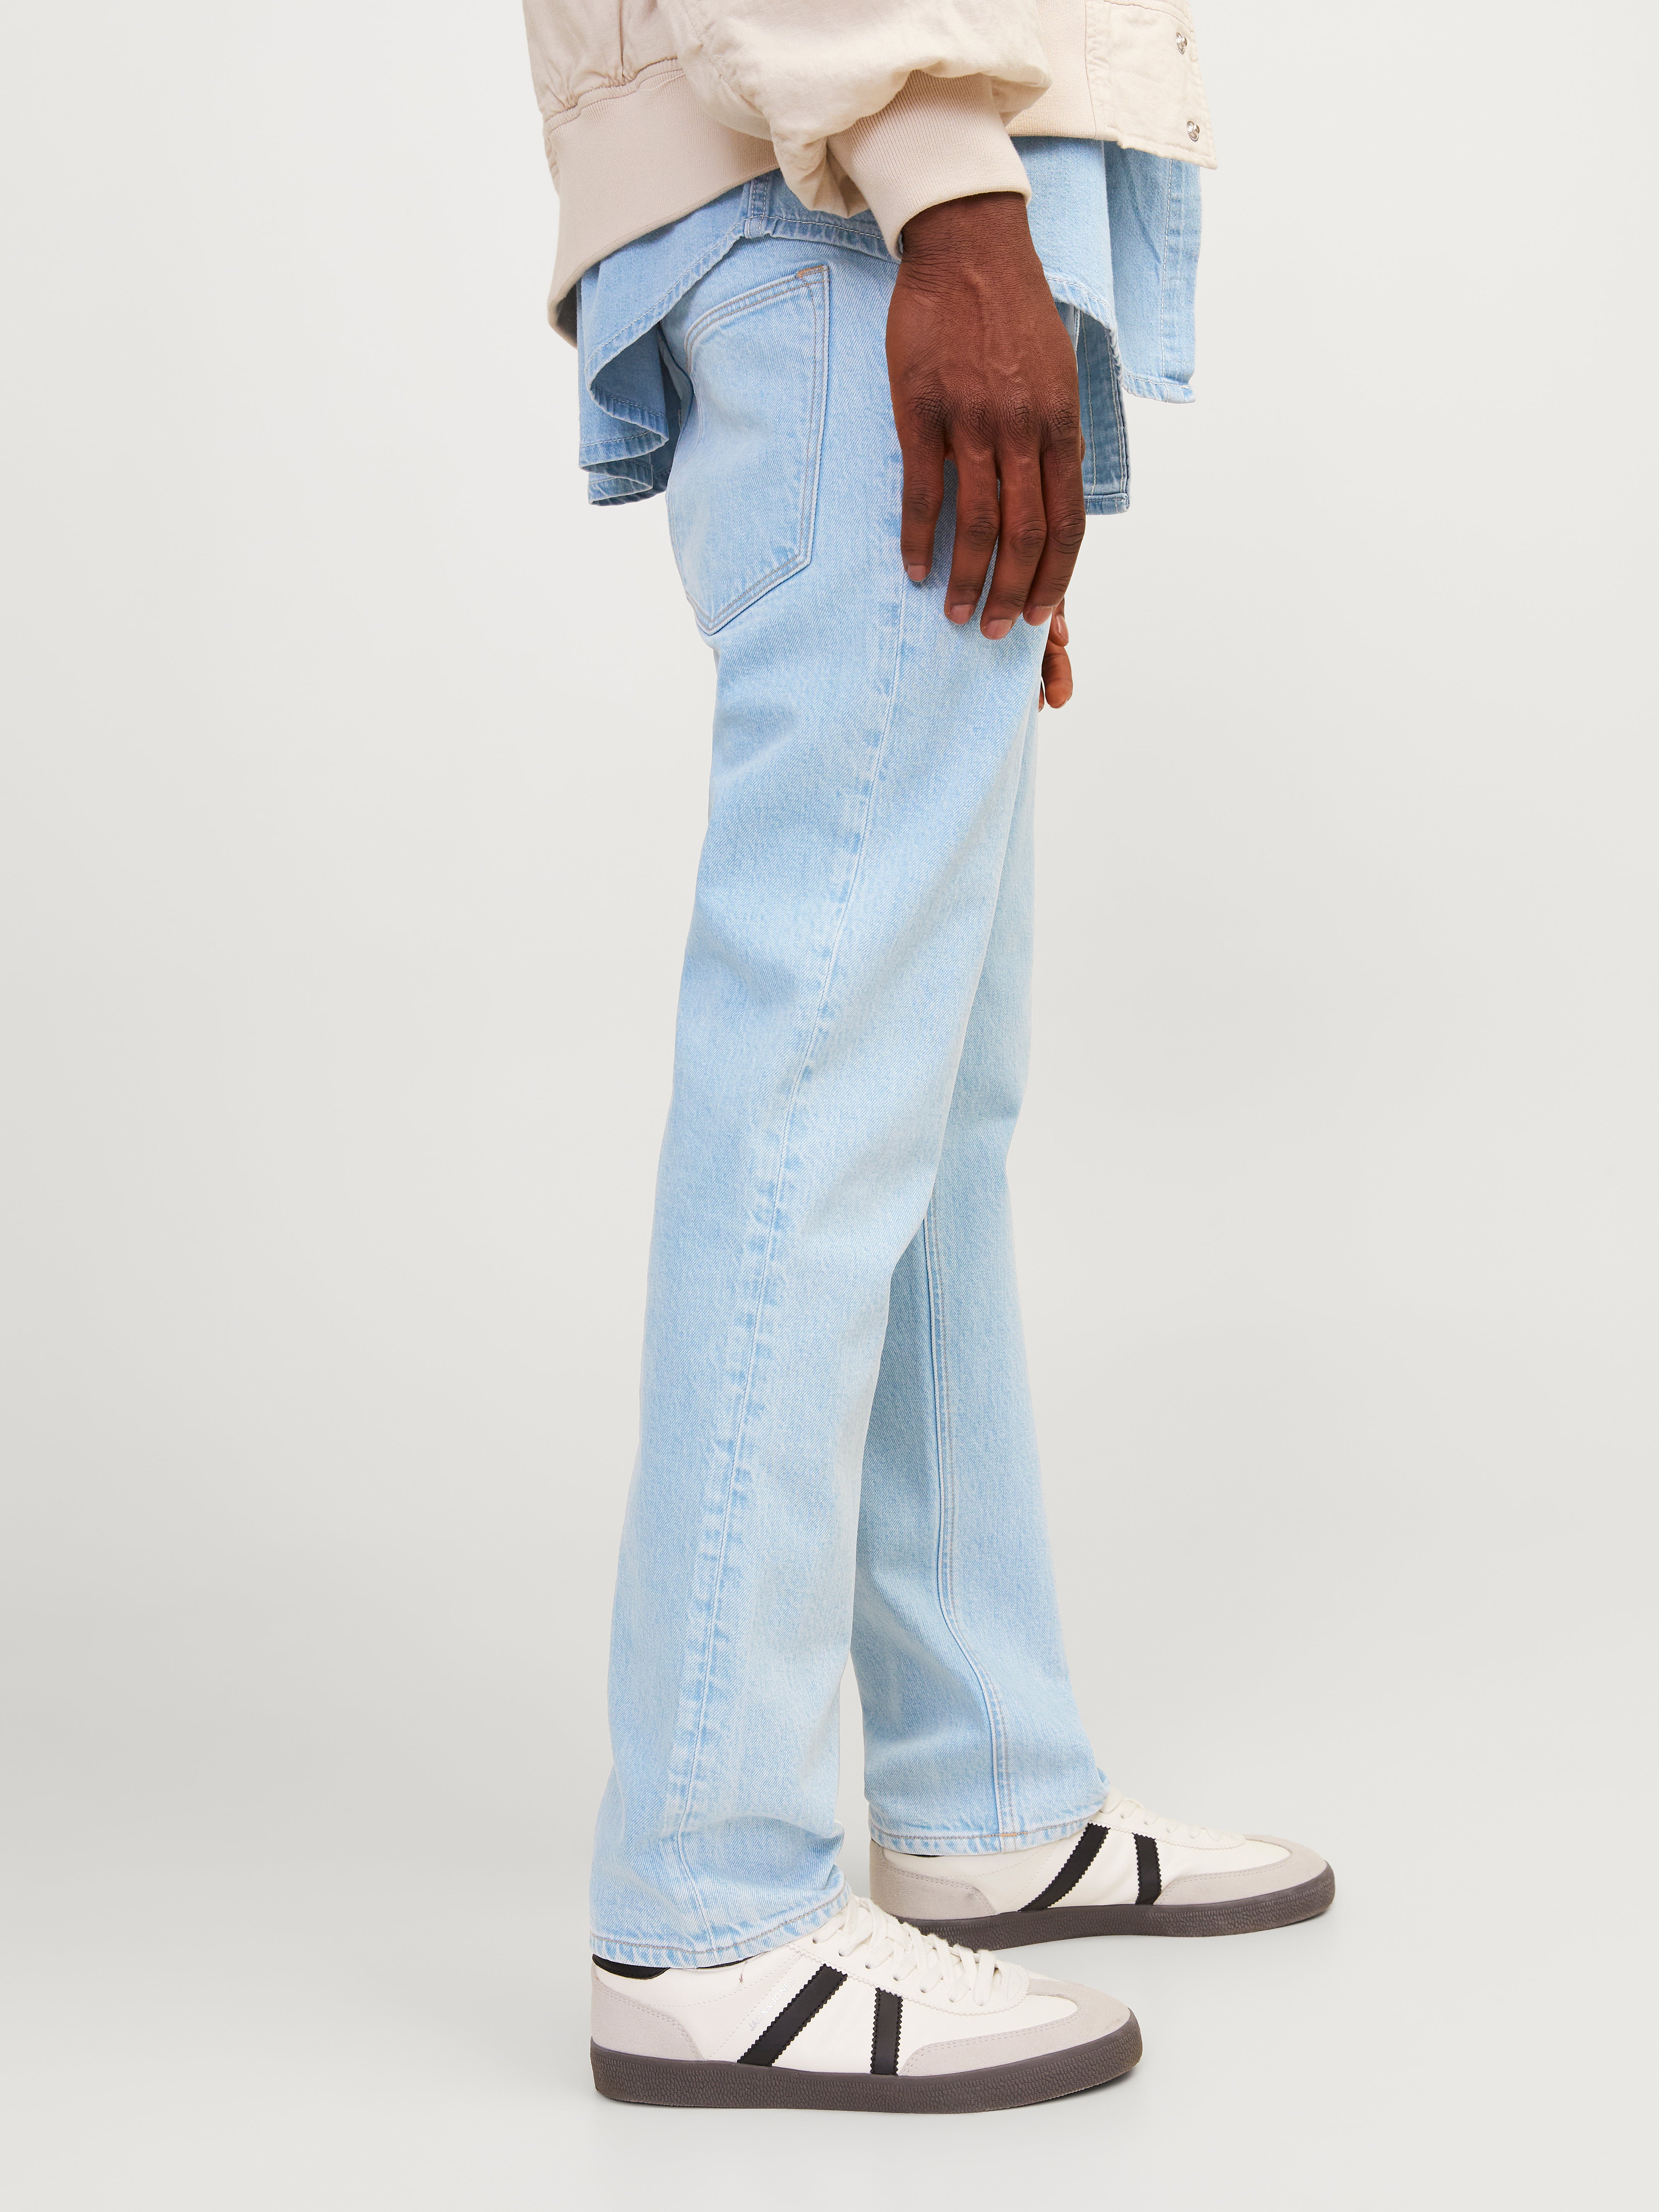 Regular Fit Jeans | Jack & Jones®